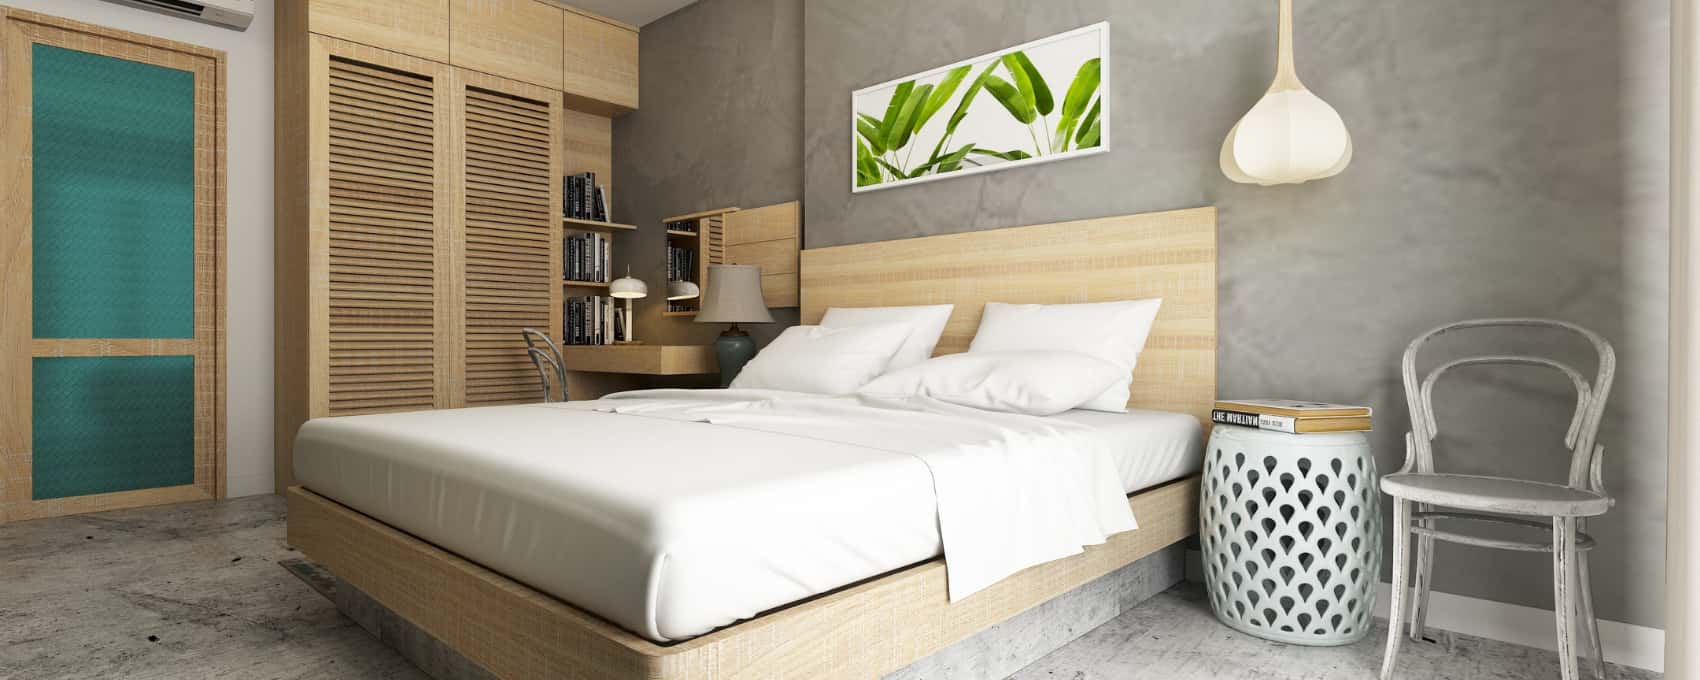 Bedroom Architectural Design Ideas